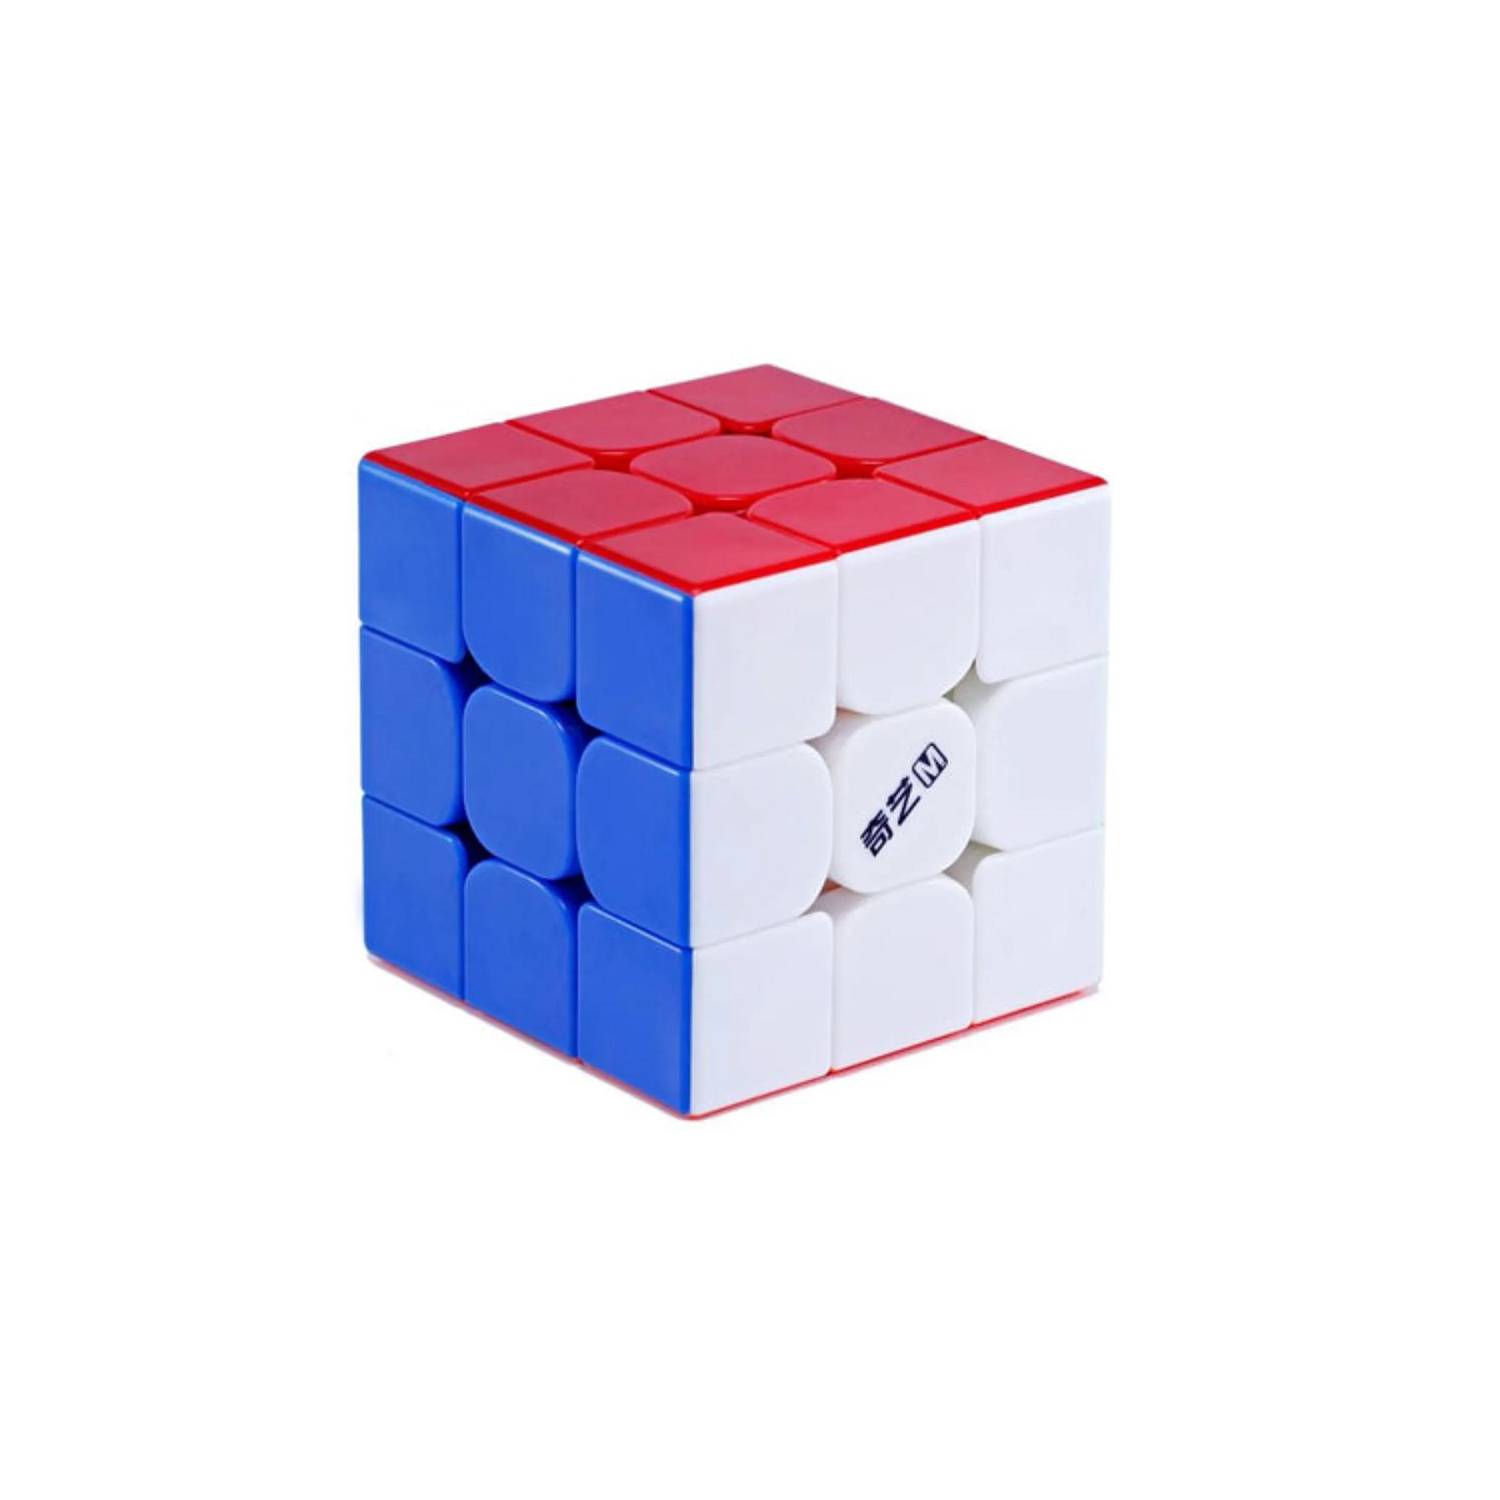 Cubo Rubik Magnético Profesional 3x3 GENERICO